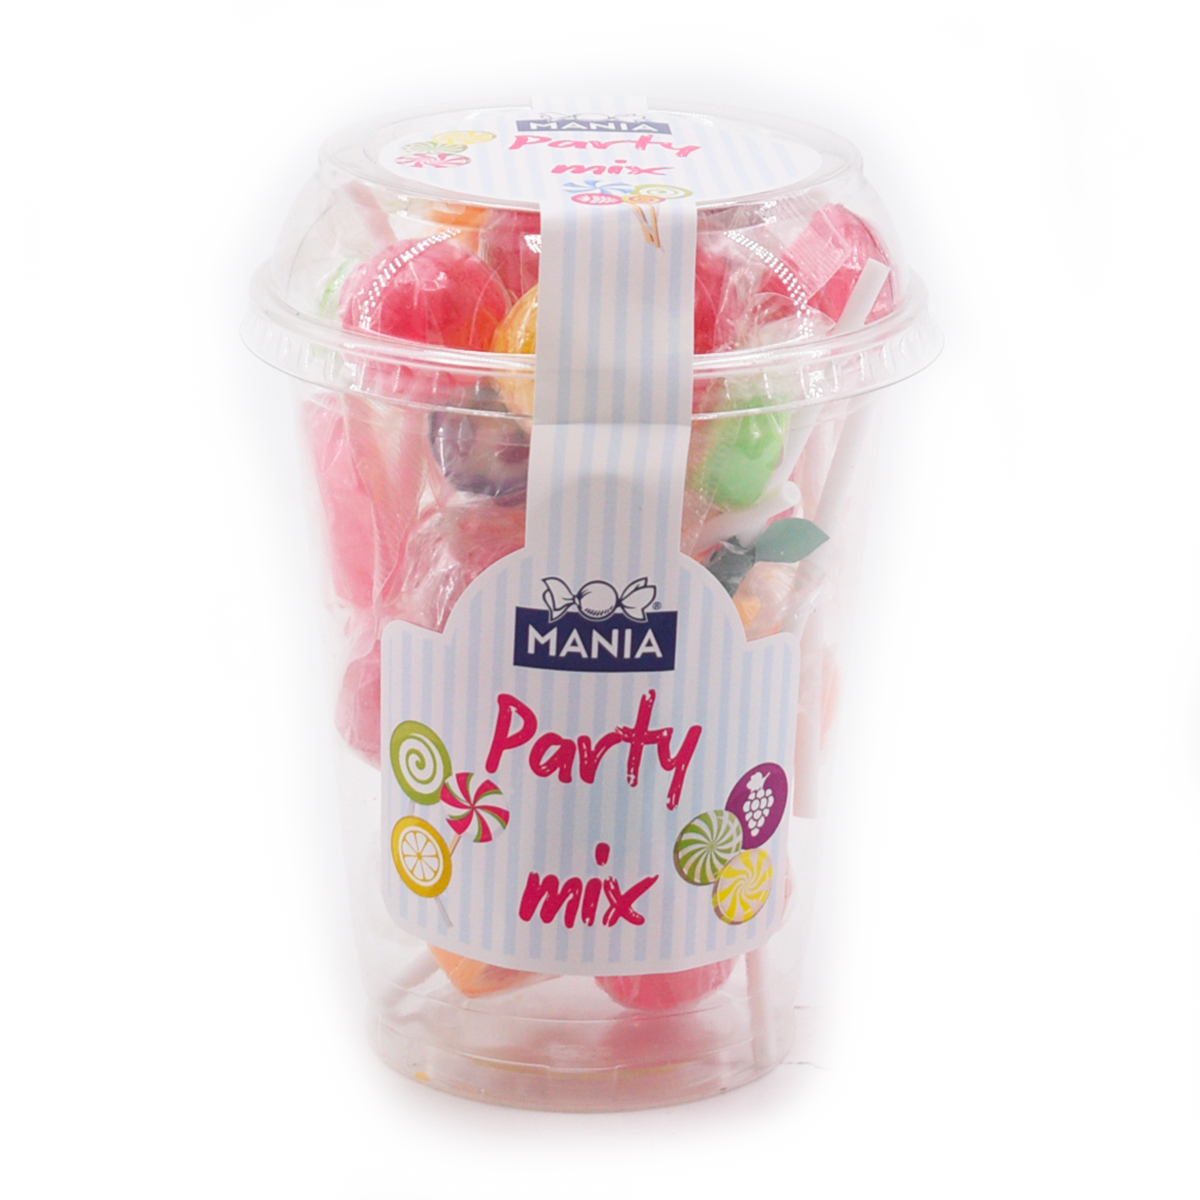 Mania Bicchiere Party Mix, Caramelle Dure Gusto Frutta e Cola 200g